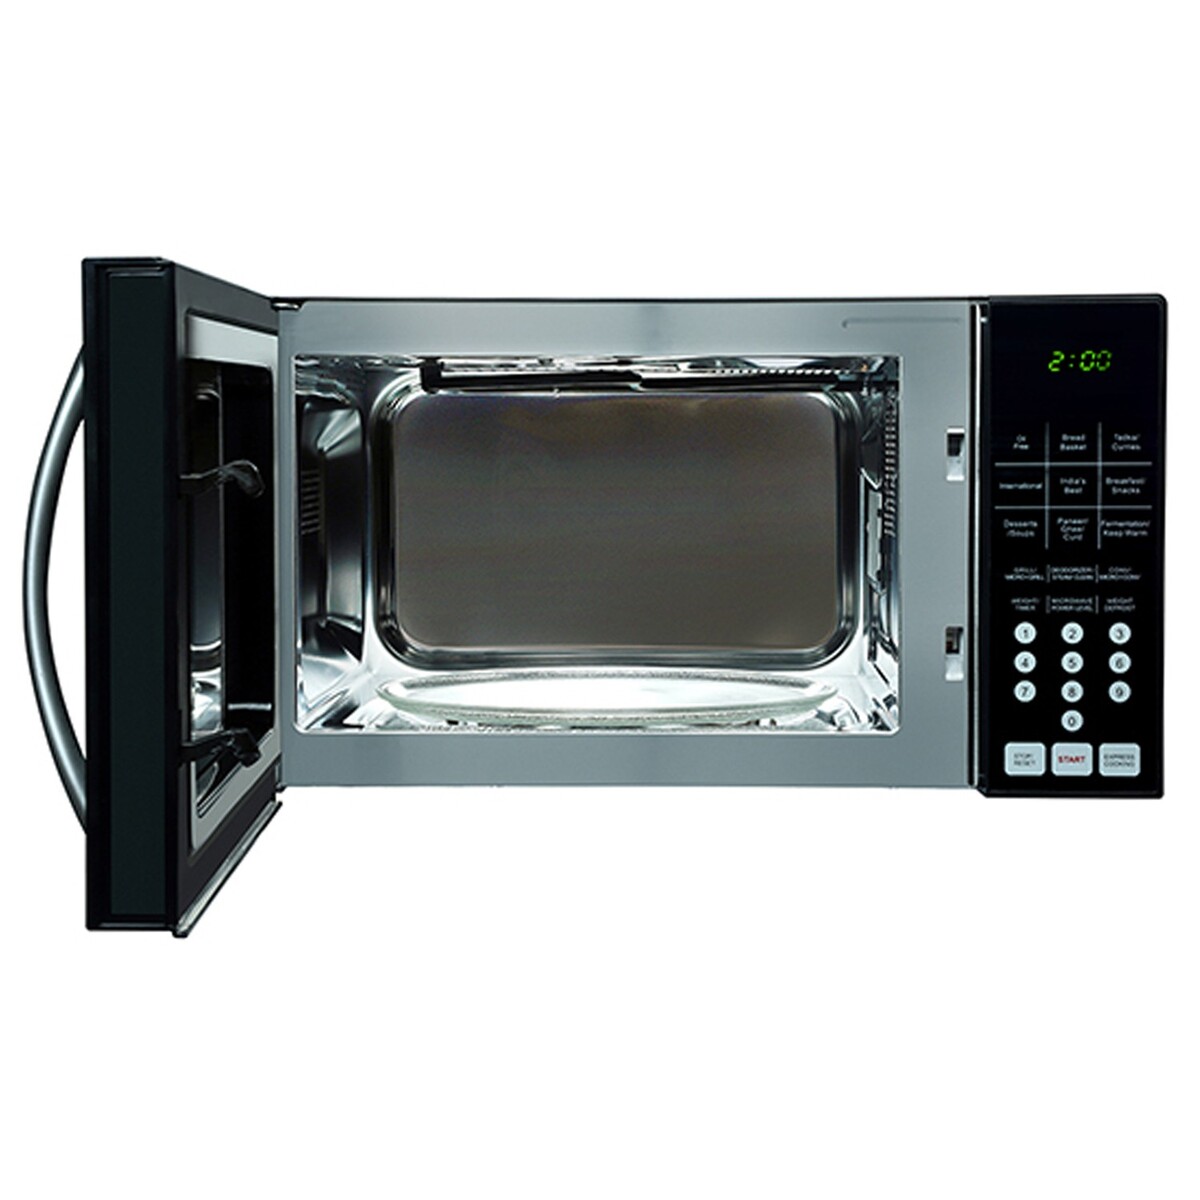 Godrej Microwave Oven GME 725 CF2PZ Purple Petal 25Ltr